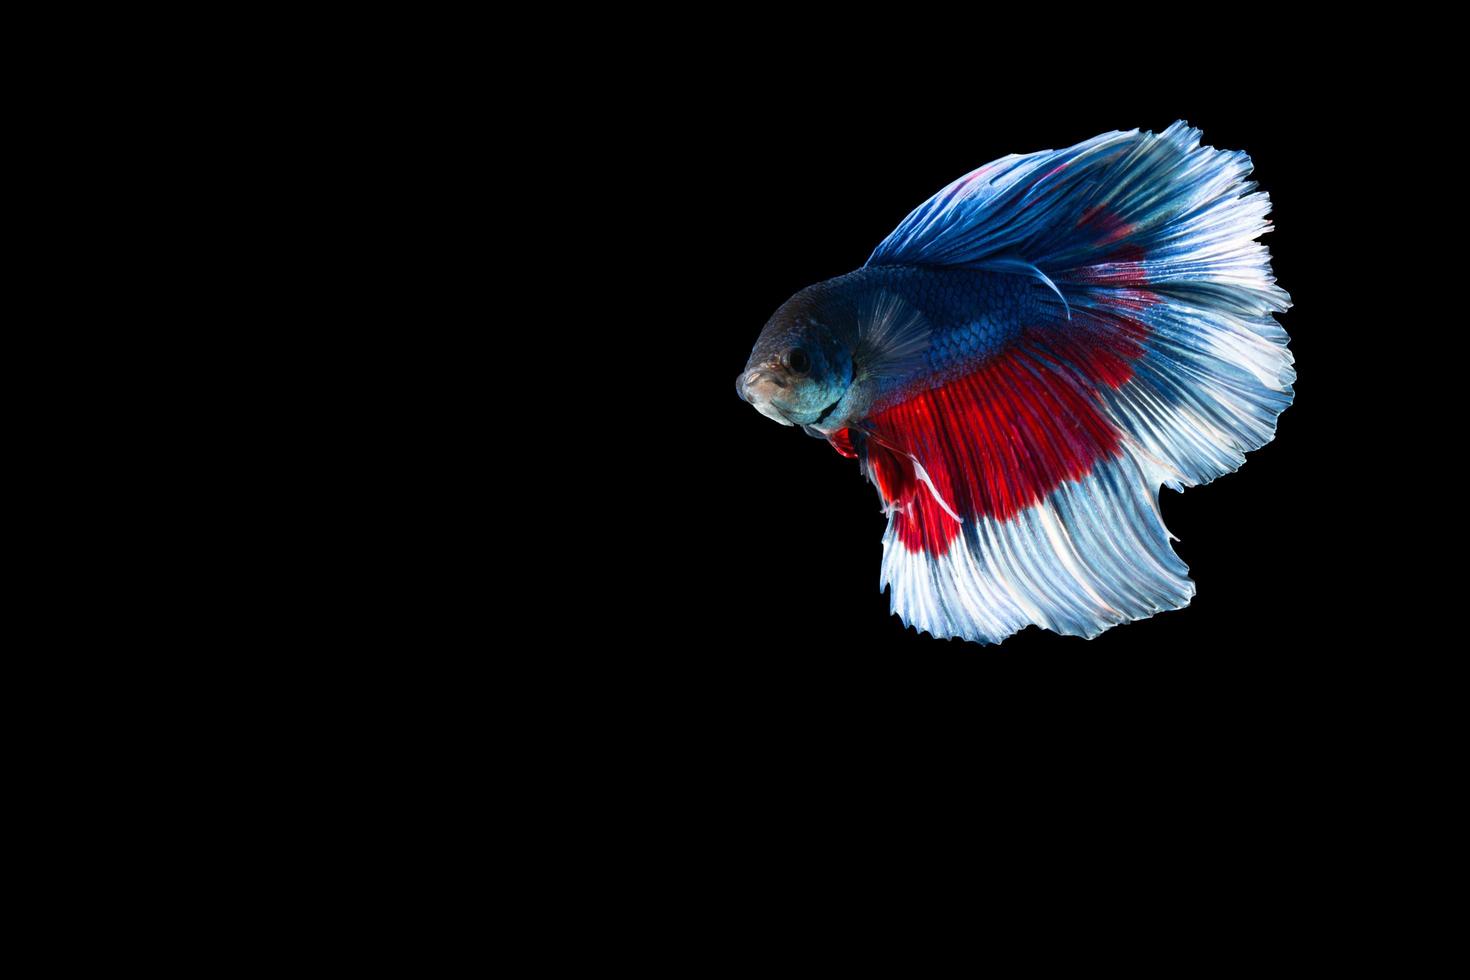 pesce betta mezzaluna con strisce blu e rosse foto